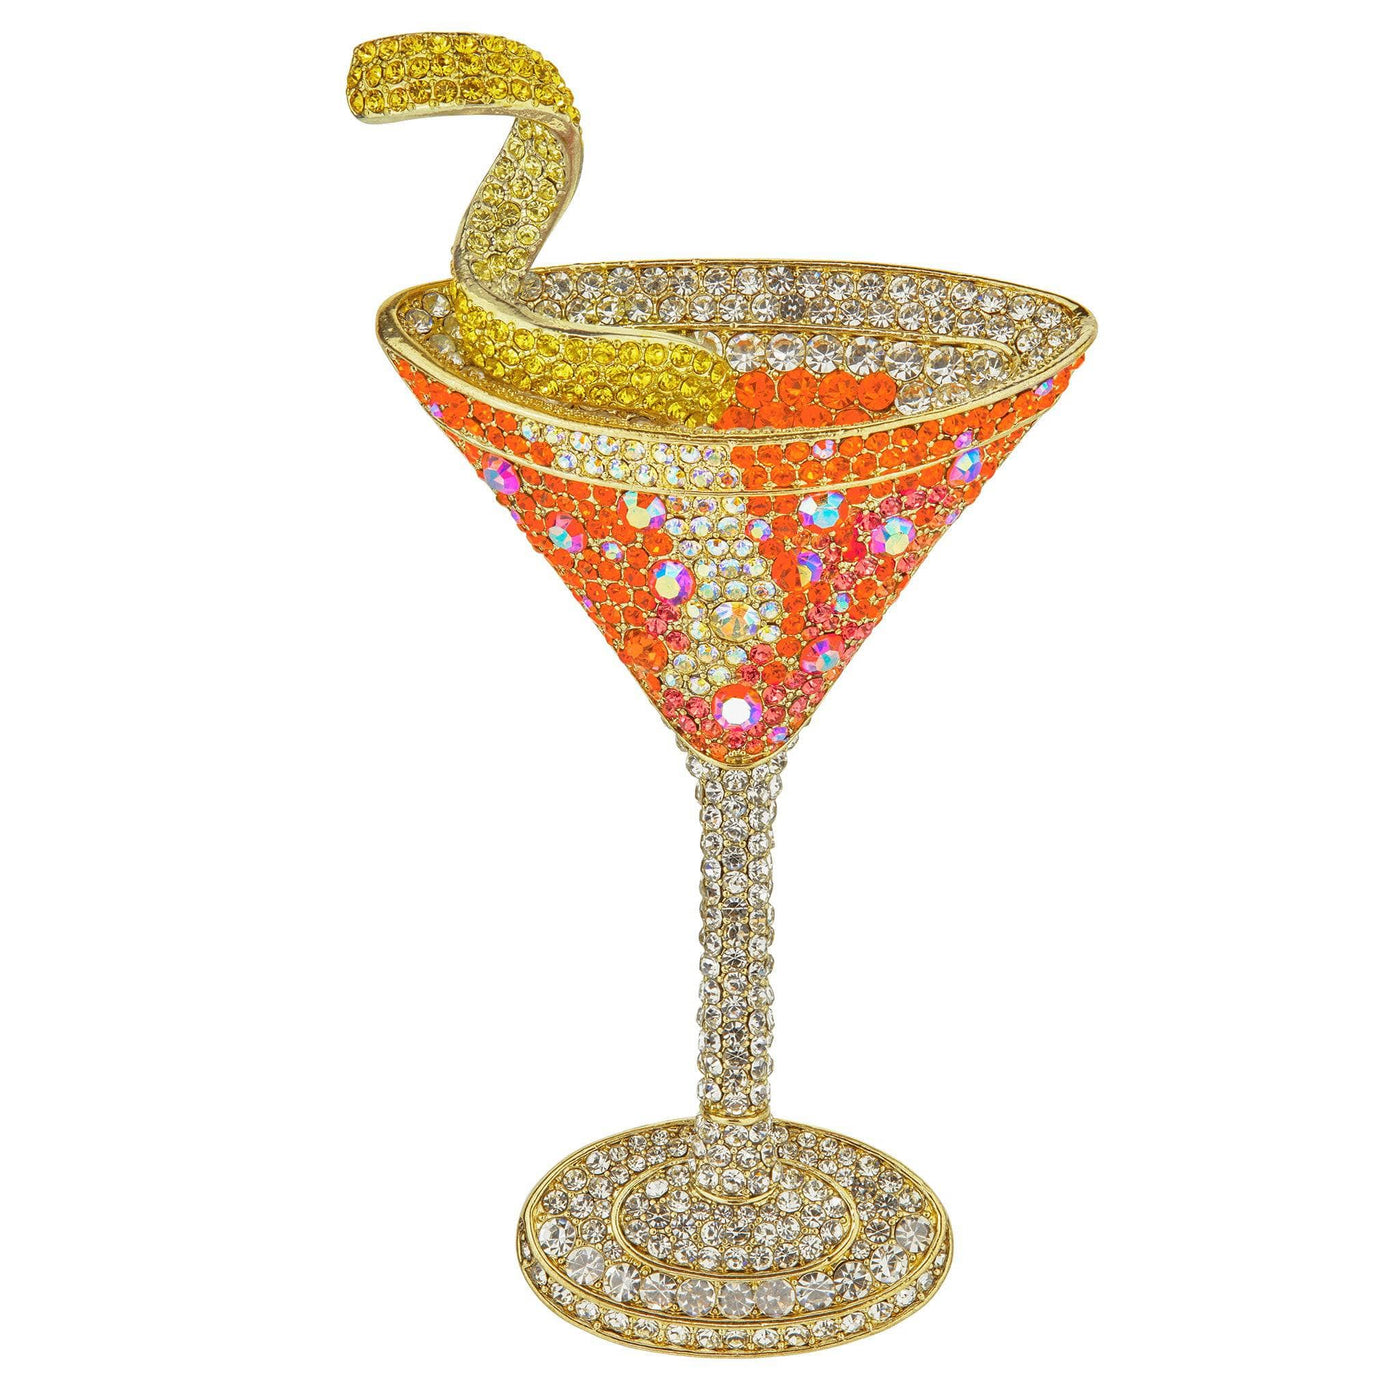 HEIDI DAUS® "Tequila Sunrise" Crystal Cocktail Pin